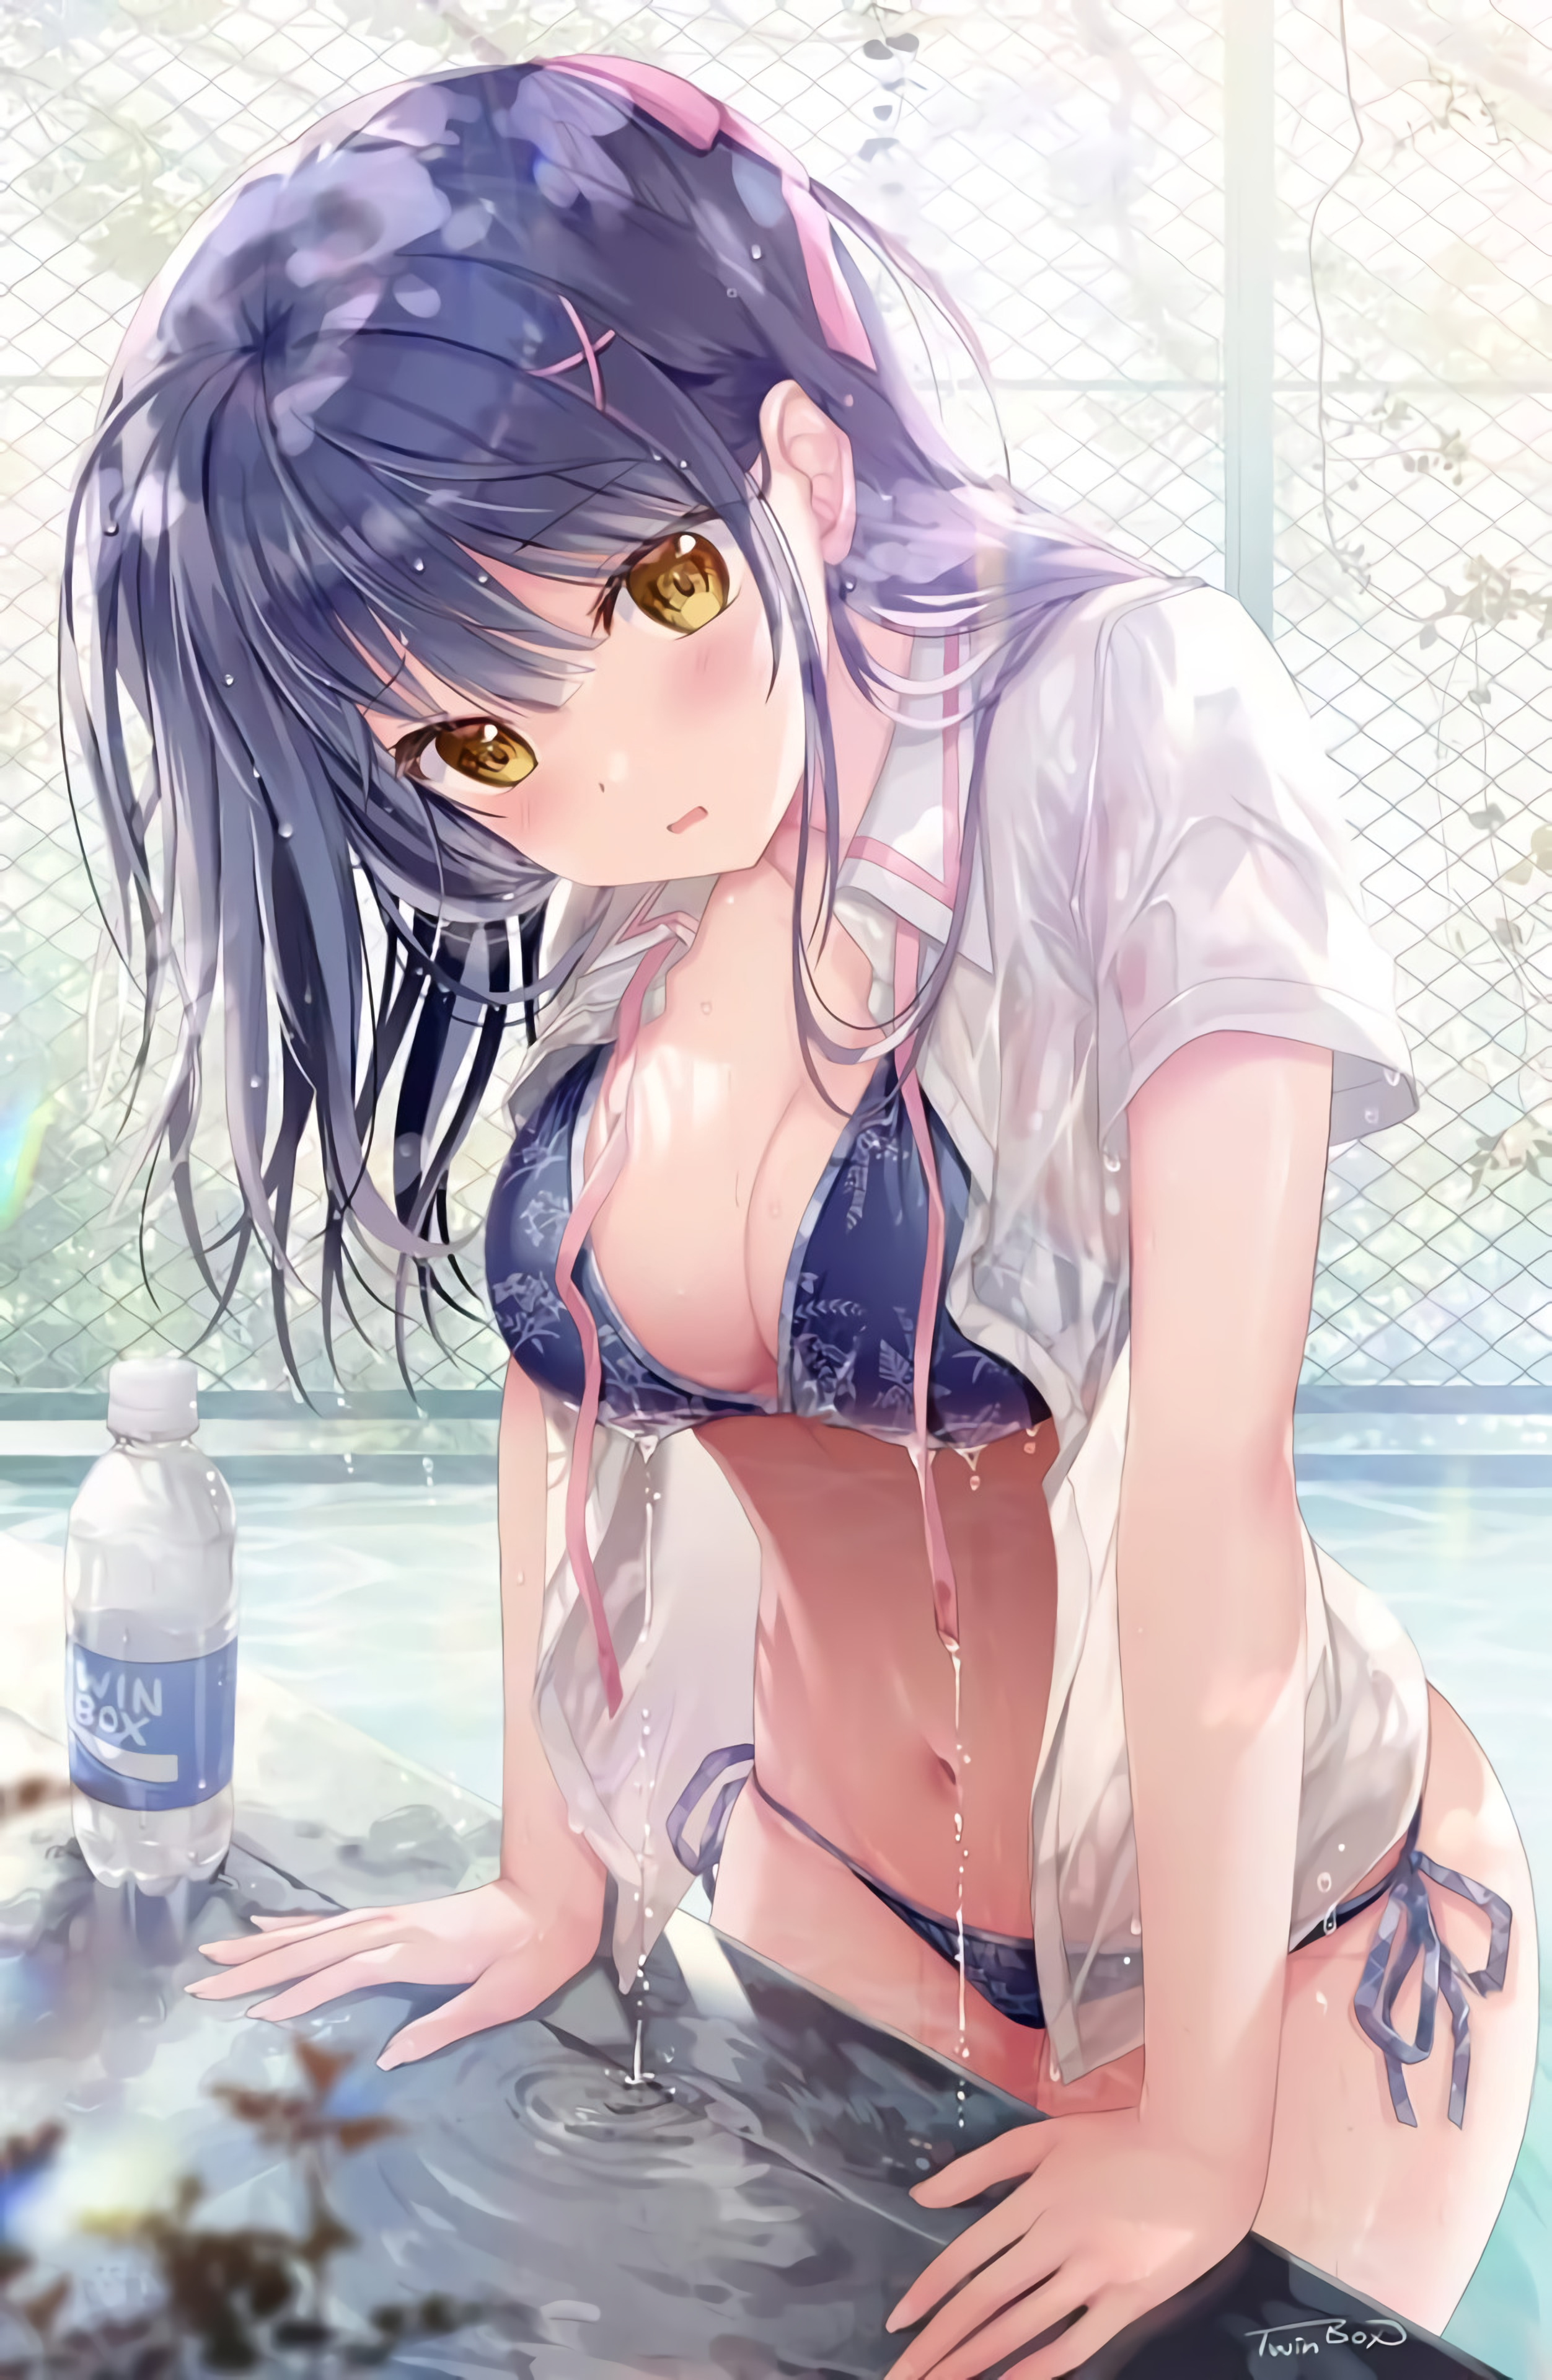 Anime 2504x3840 anime anime girls bikini wet body wet clothing dripping purple hair yellow eyes water bottle open shirt wet